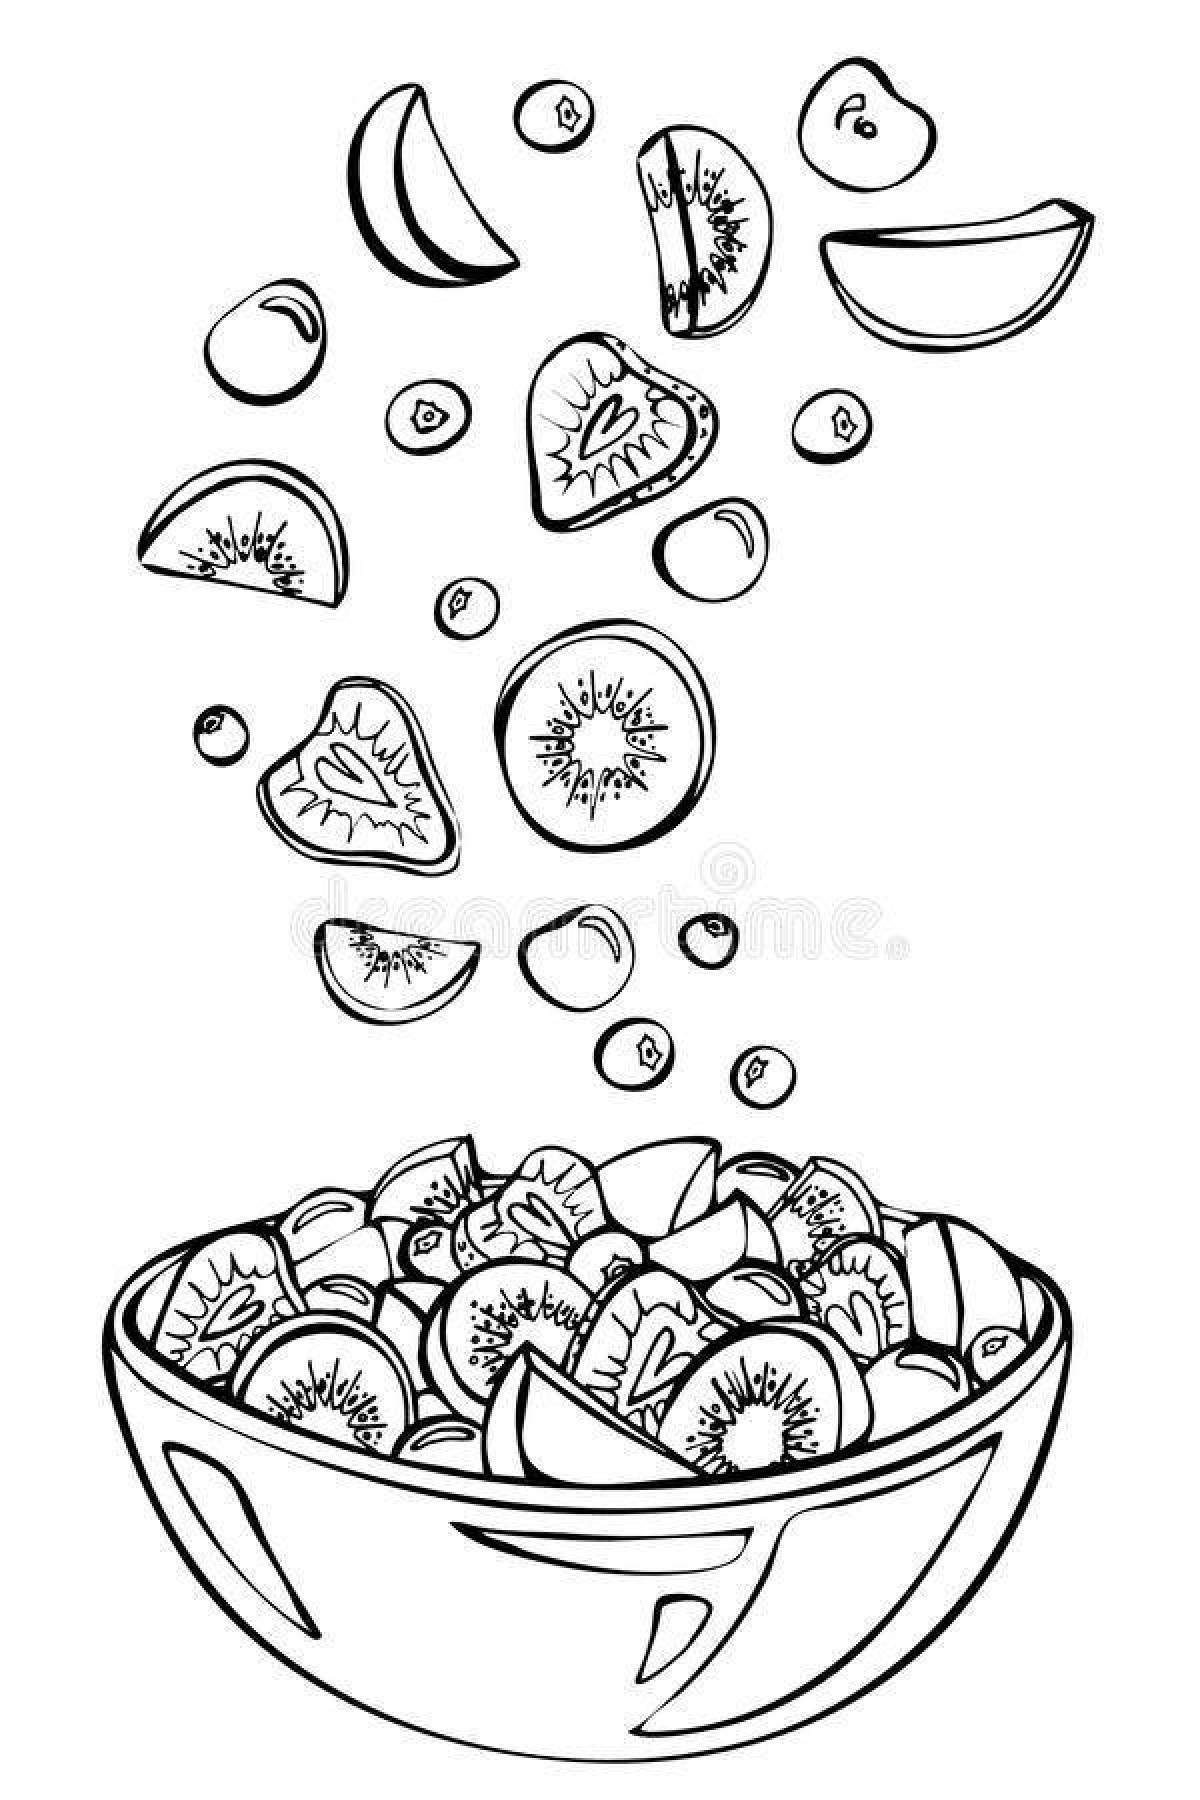 Delicious fruit salad coloring page